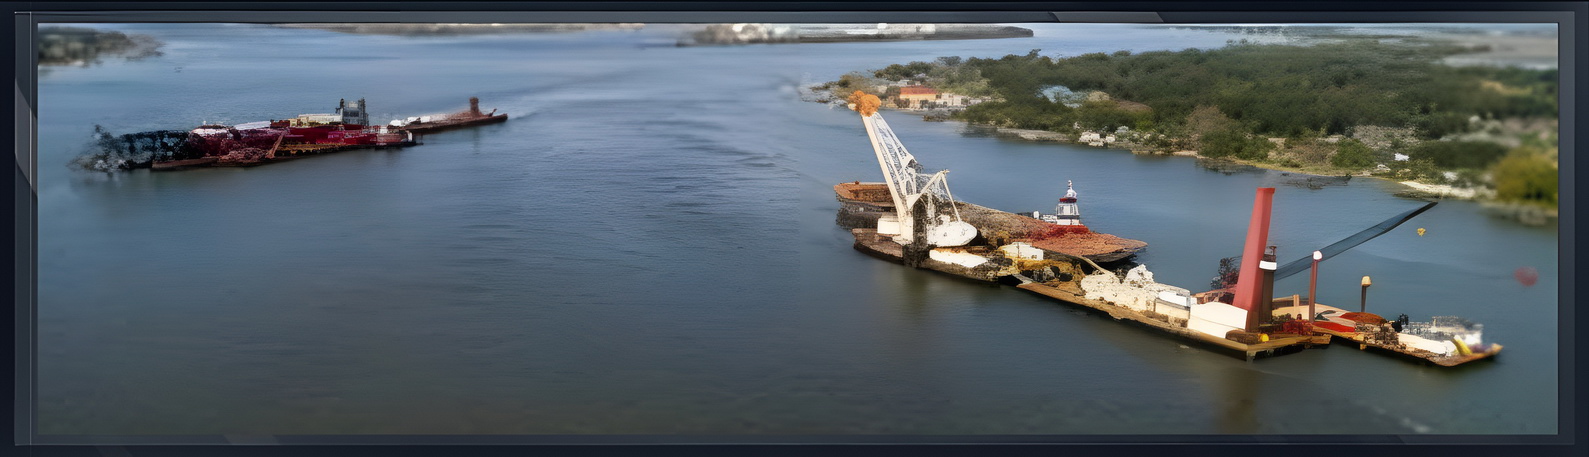 Jacksonville Harbor Project